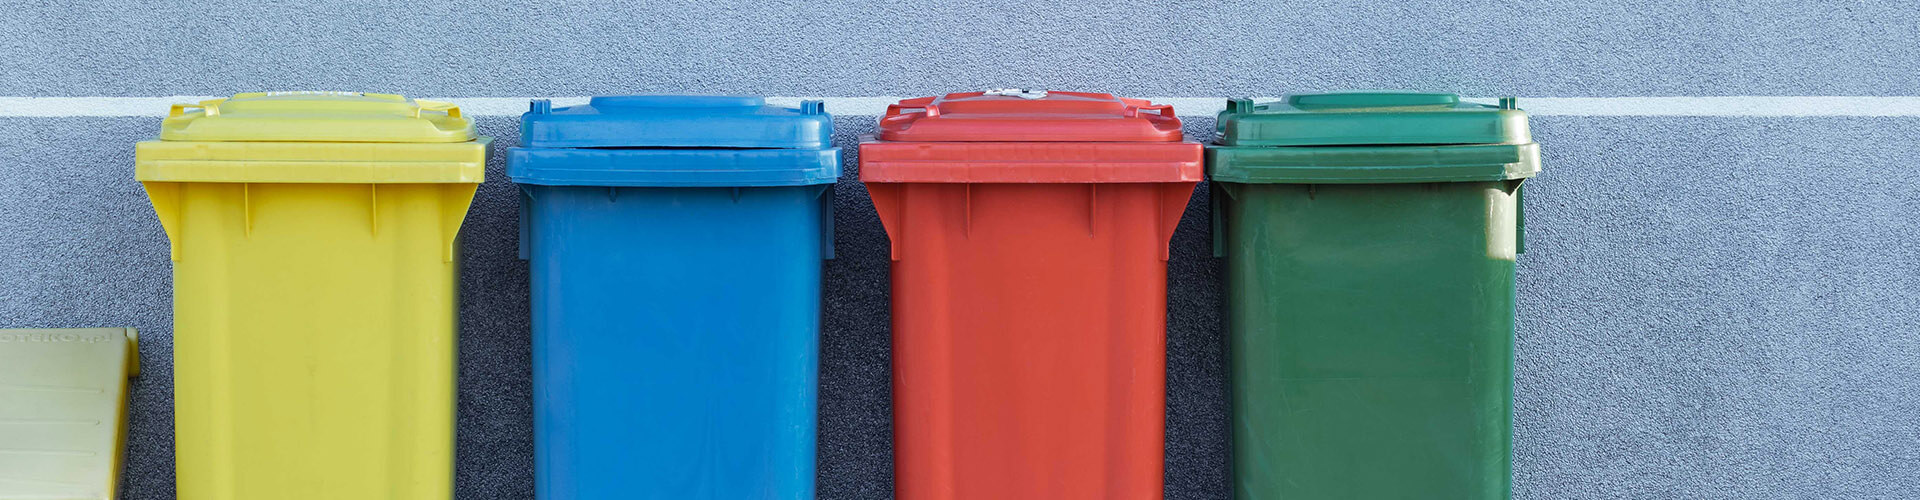 colourful bins